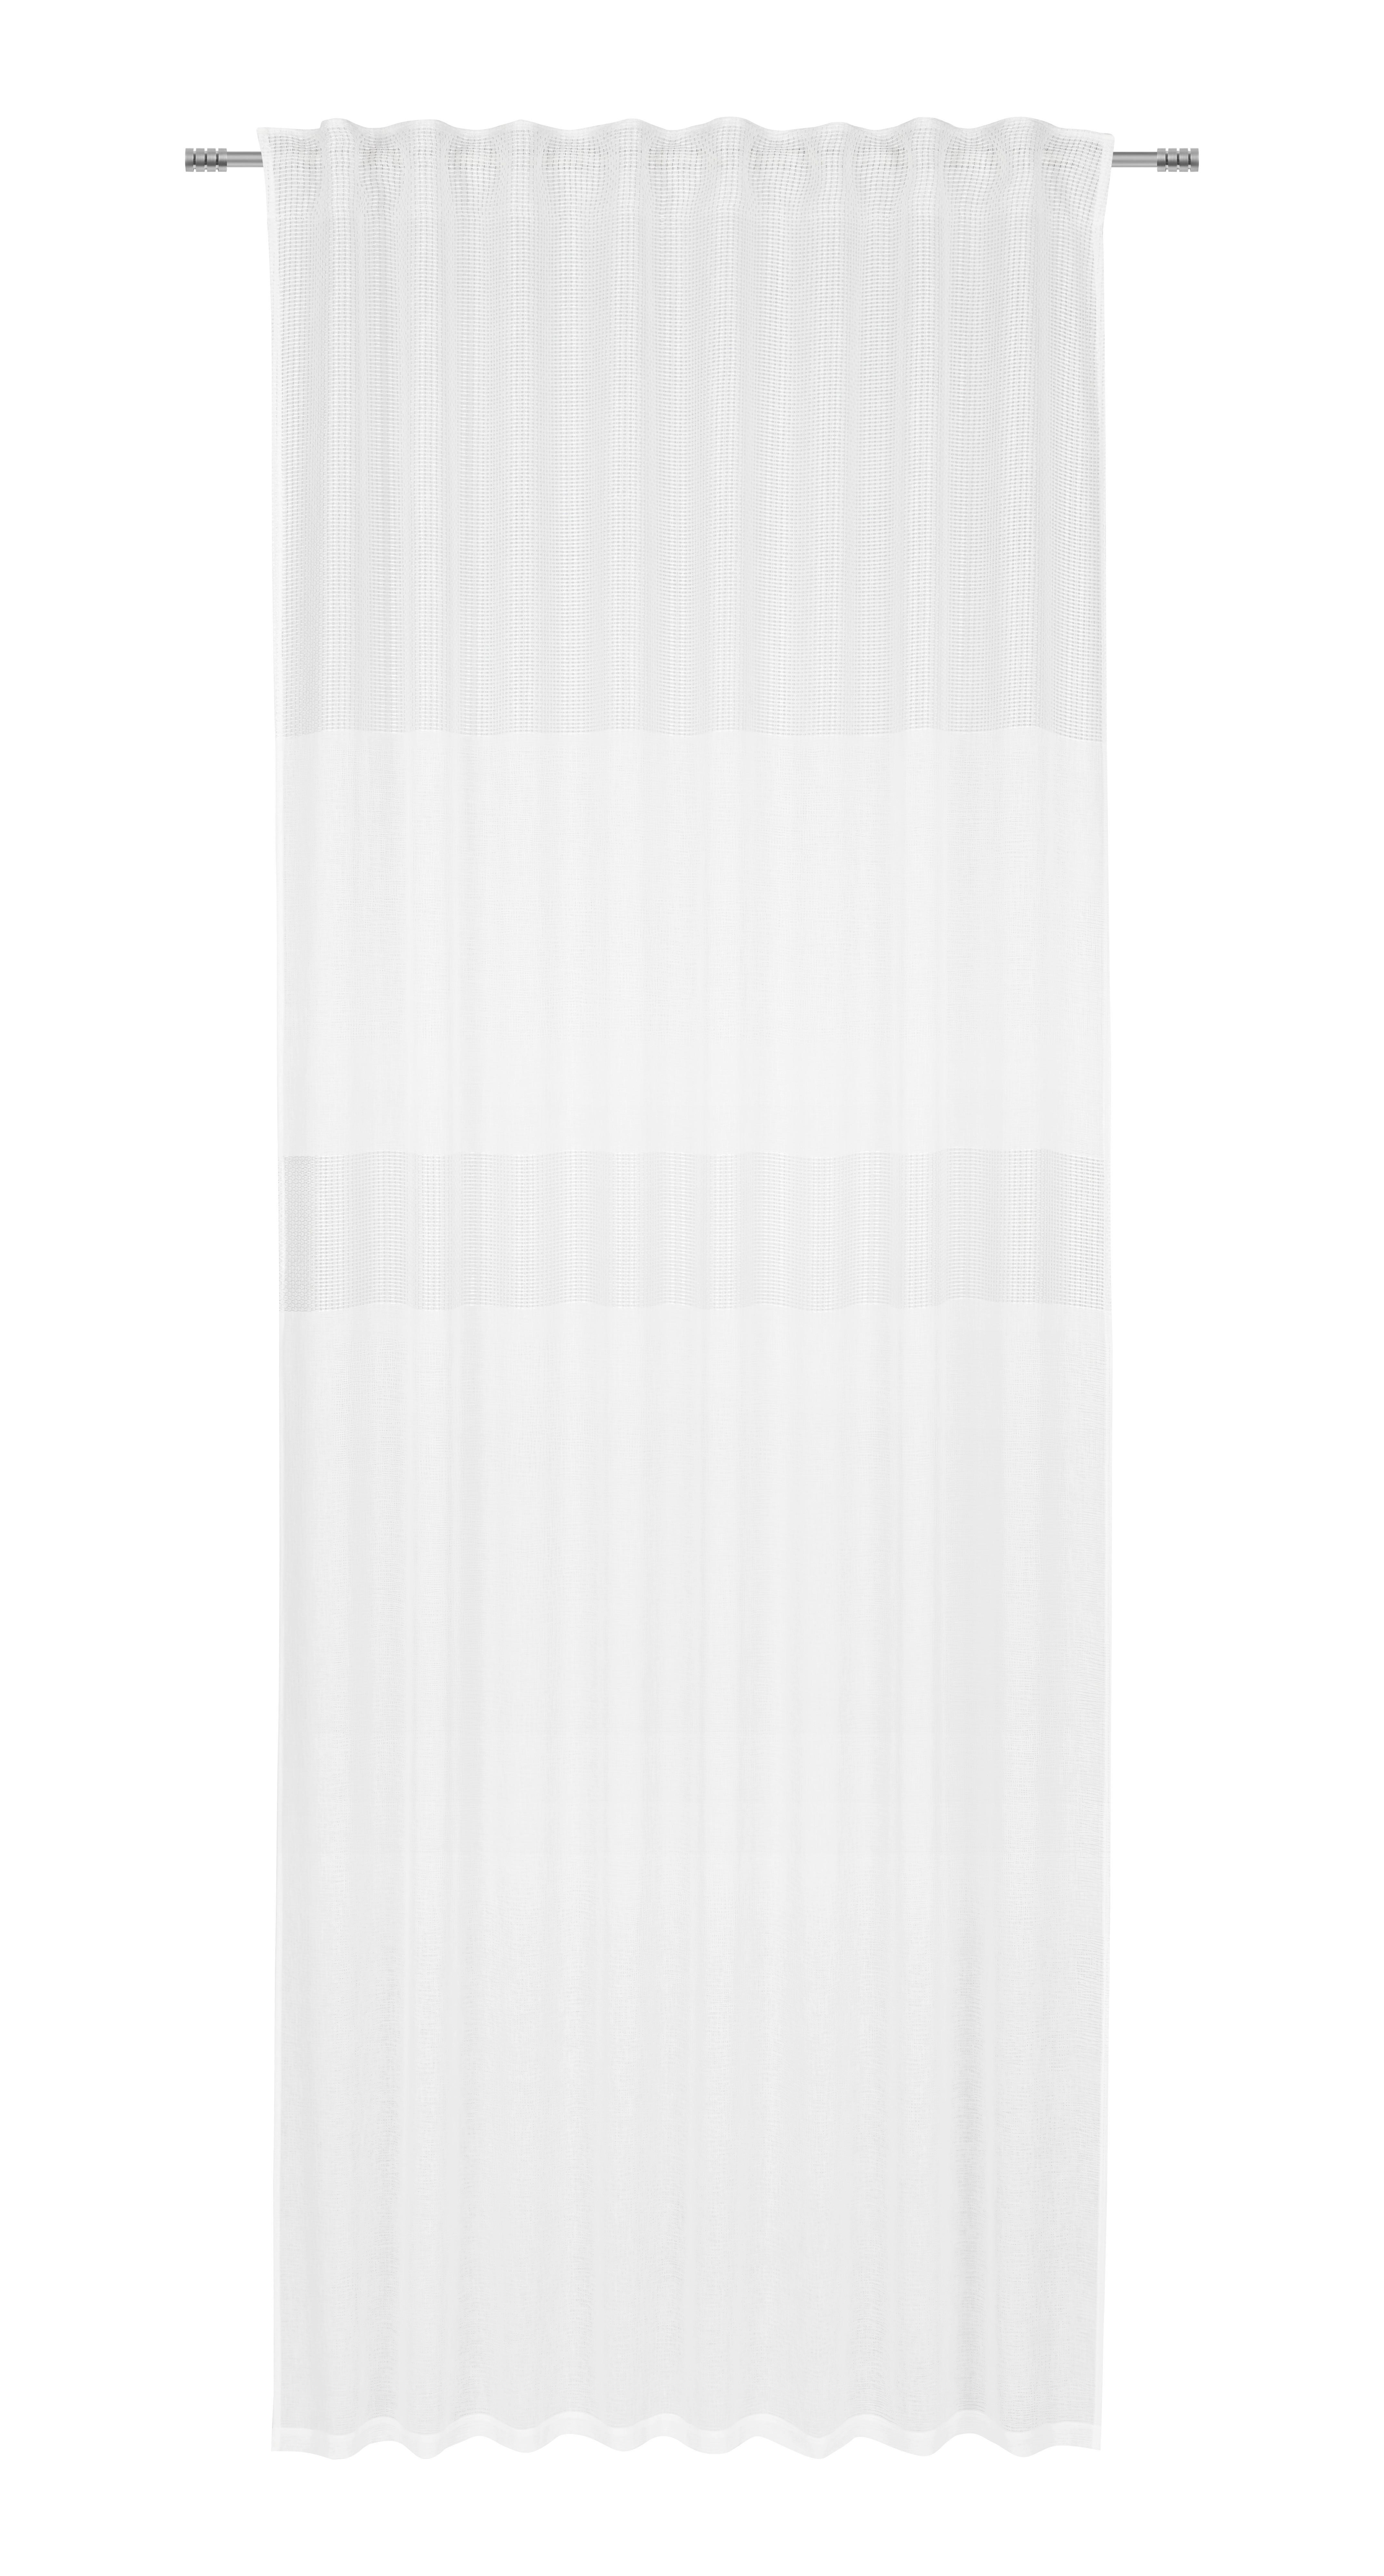 Fertigvorhang Levi in Weiß ca. 135x255cm - Weiß, MODERN, Textil (135/255cm) - Premium Living